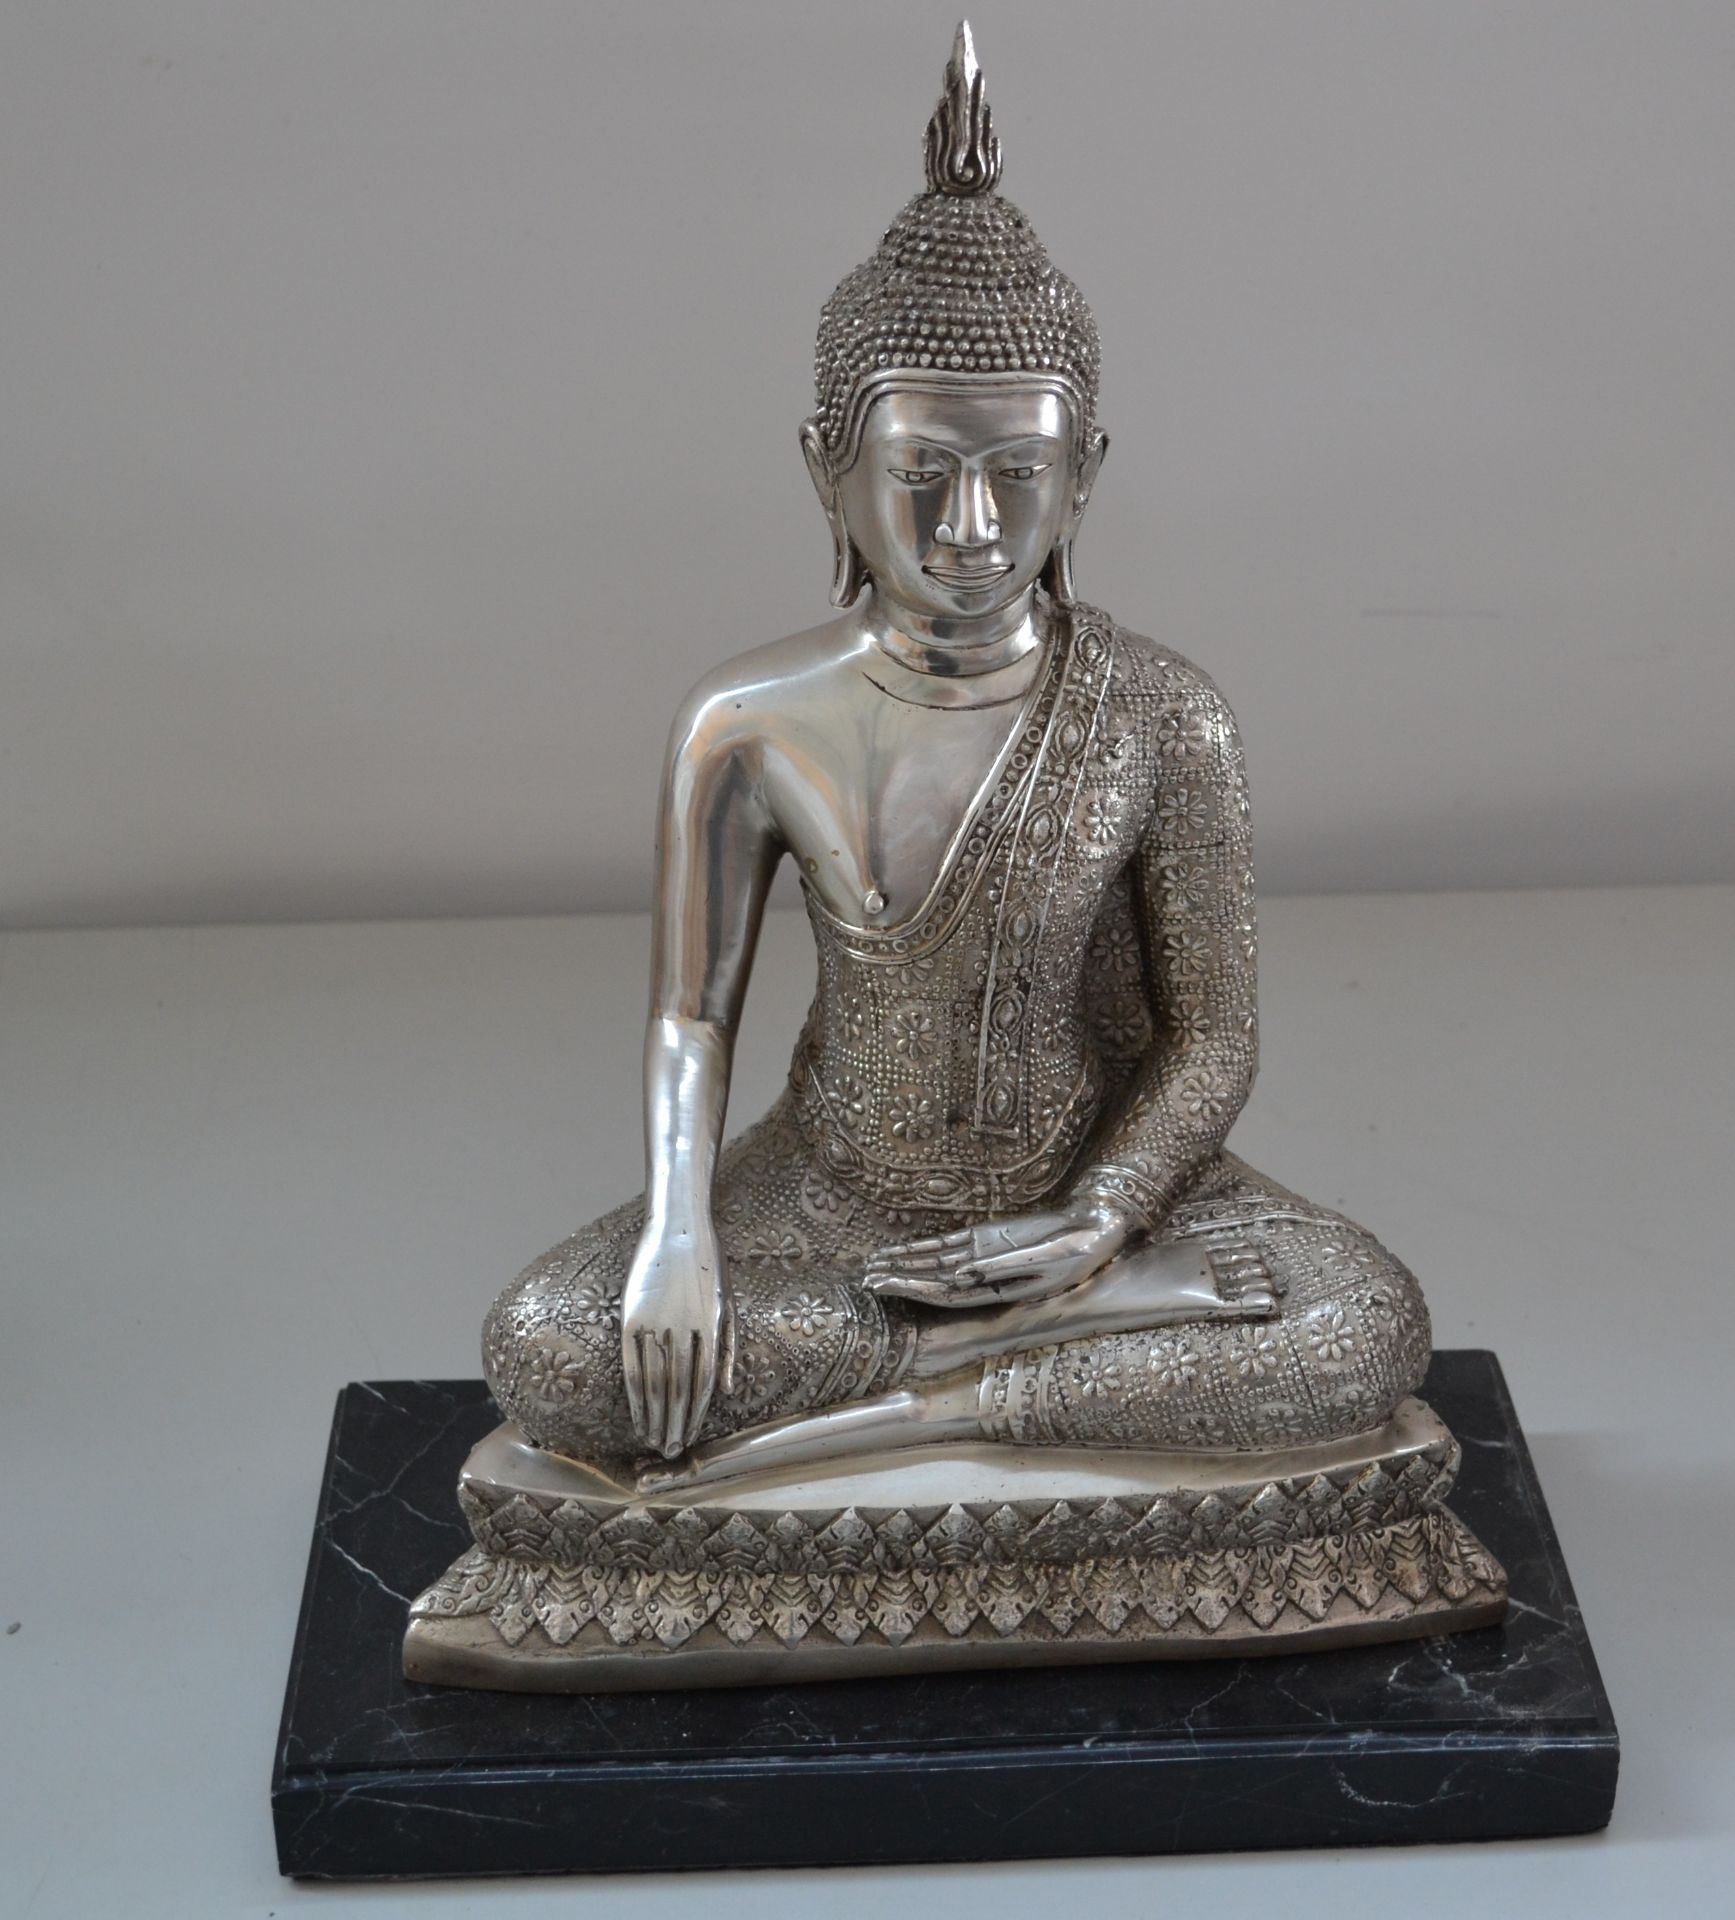 1 x Silver Thai Buddha Ornament Figure - Ref J2162 - CL314